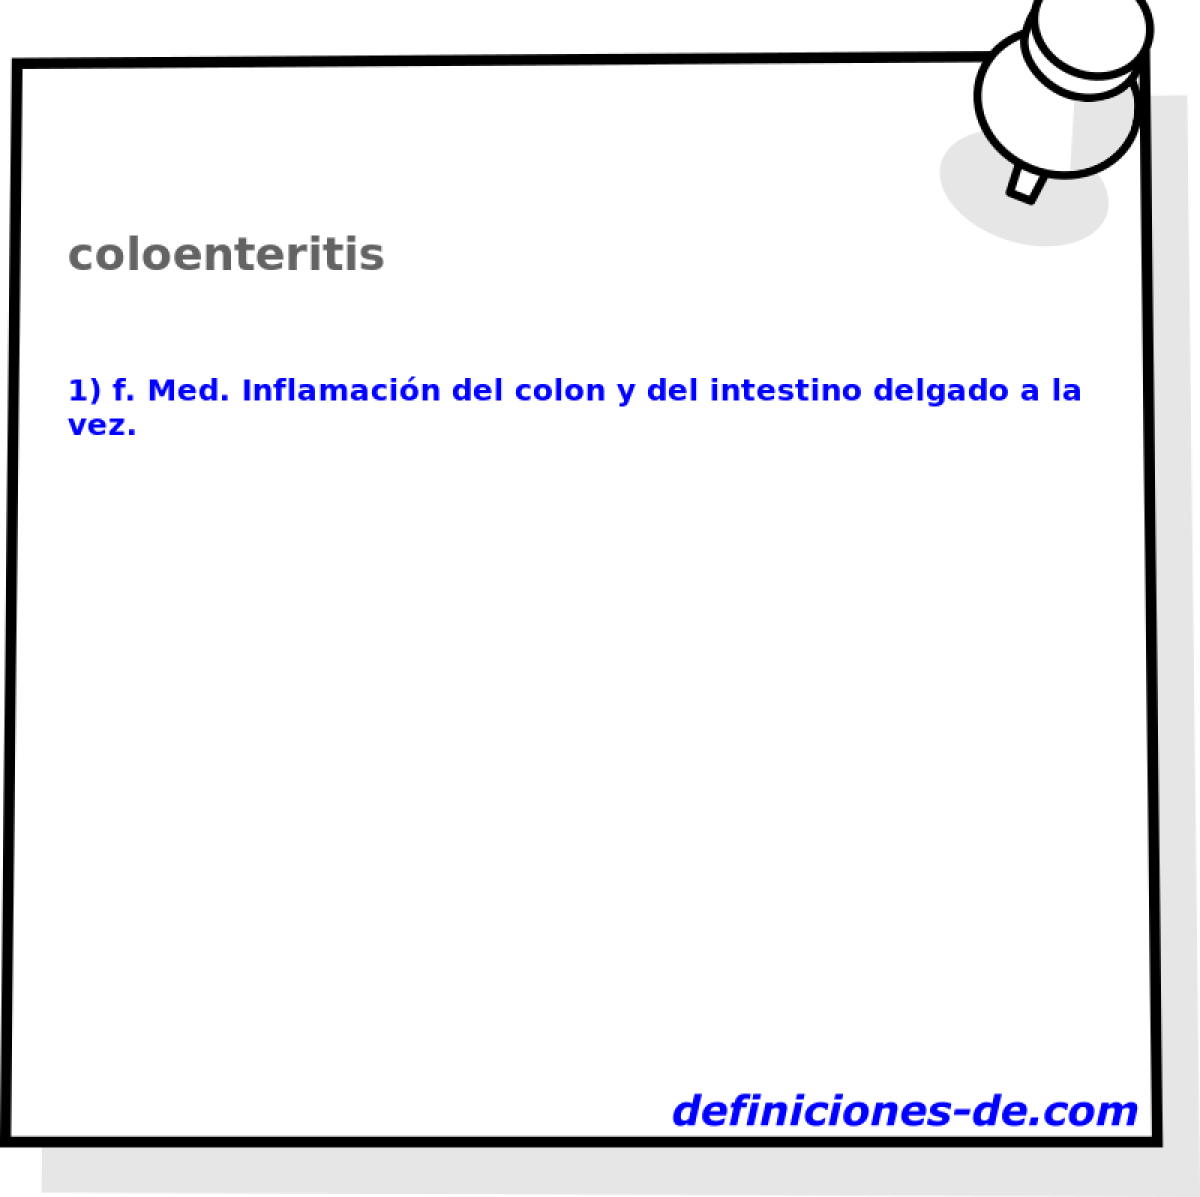 coloenteritis 